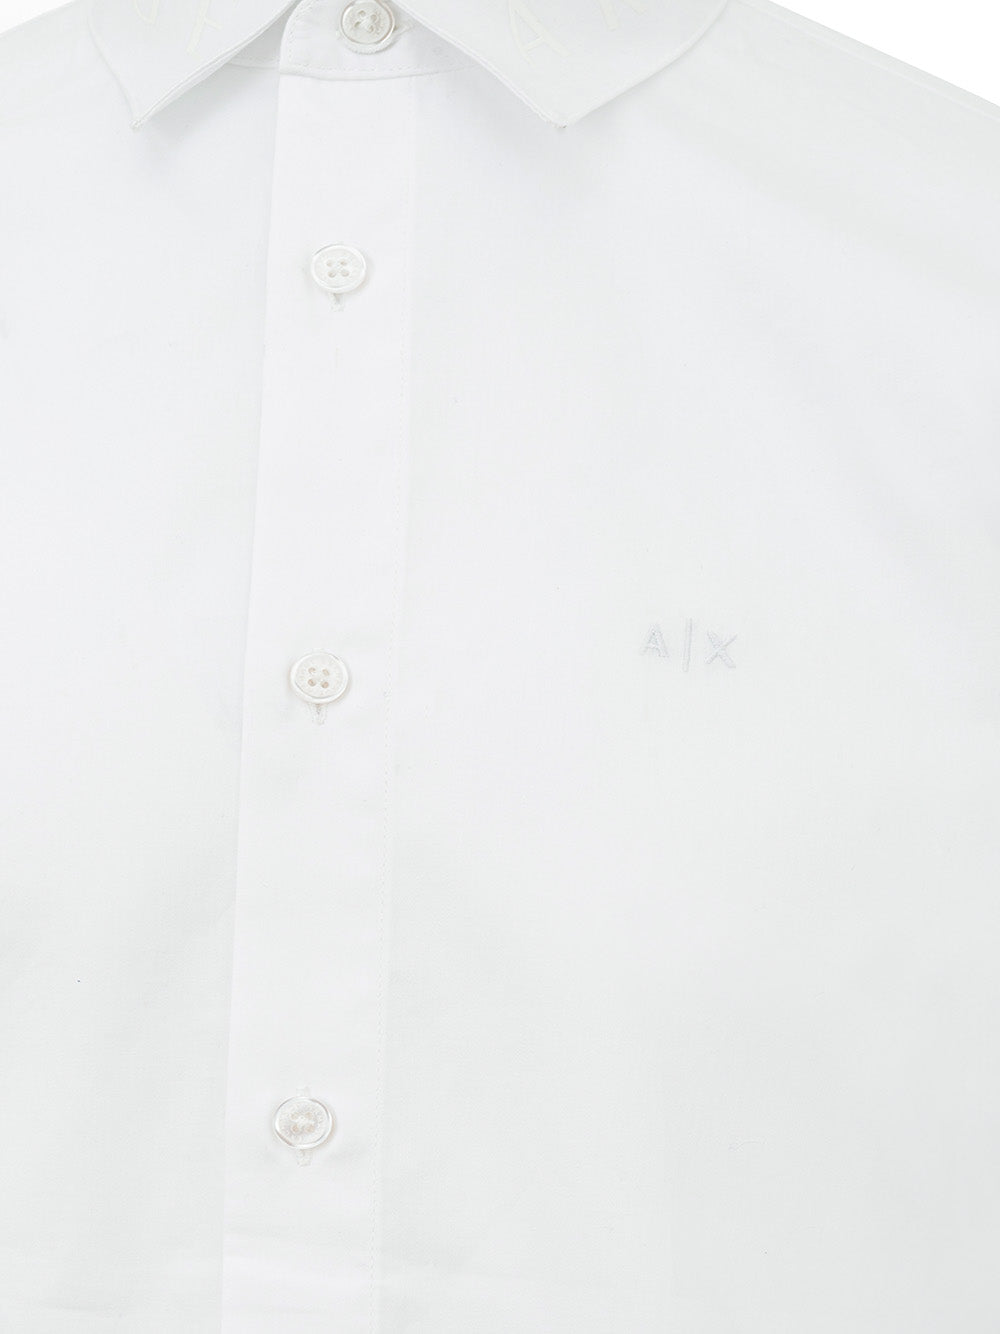 Armani Exchange White Cotton Shirt